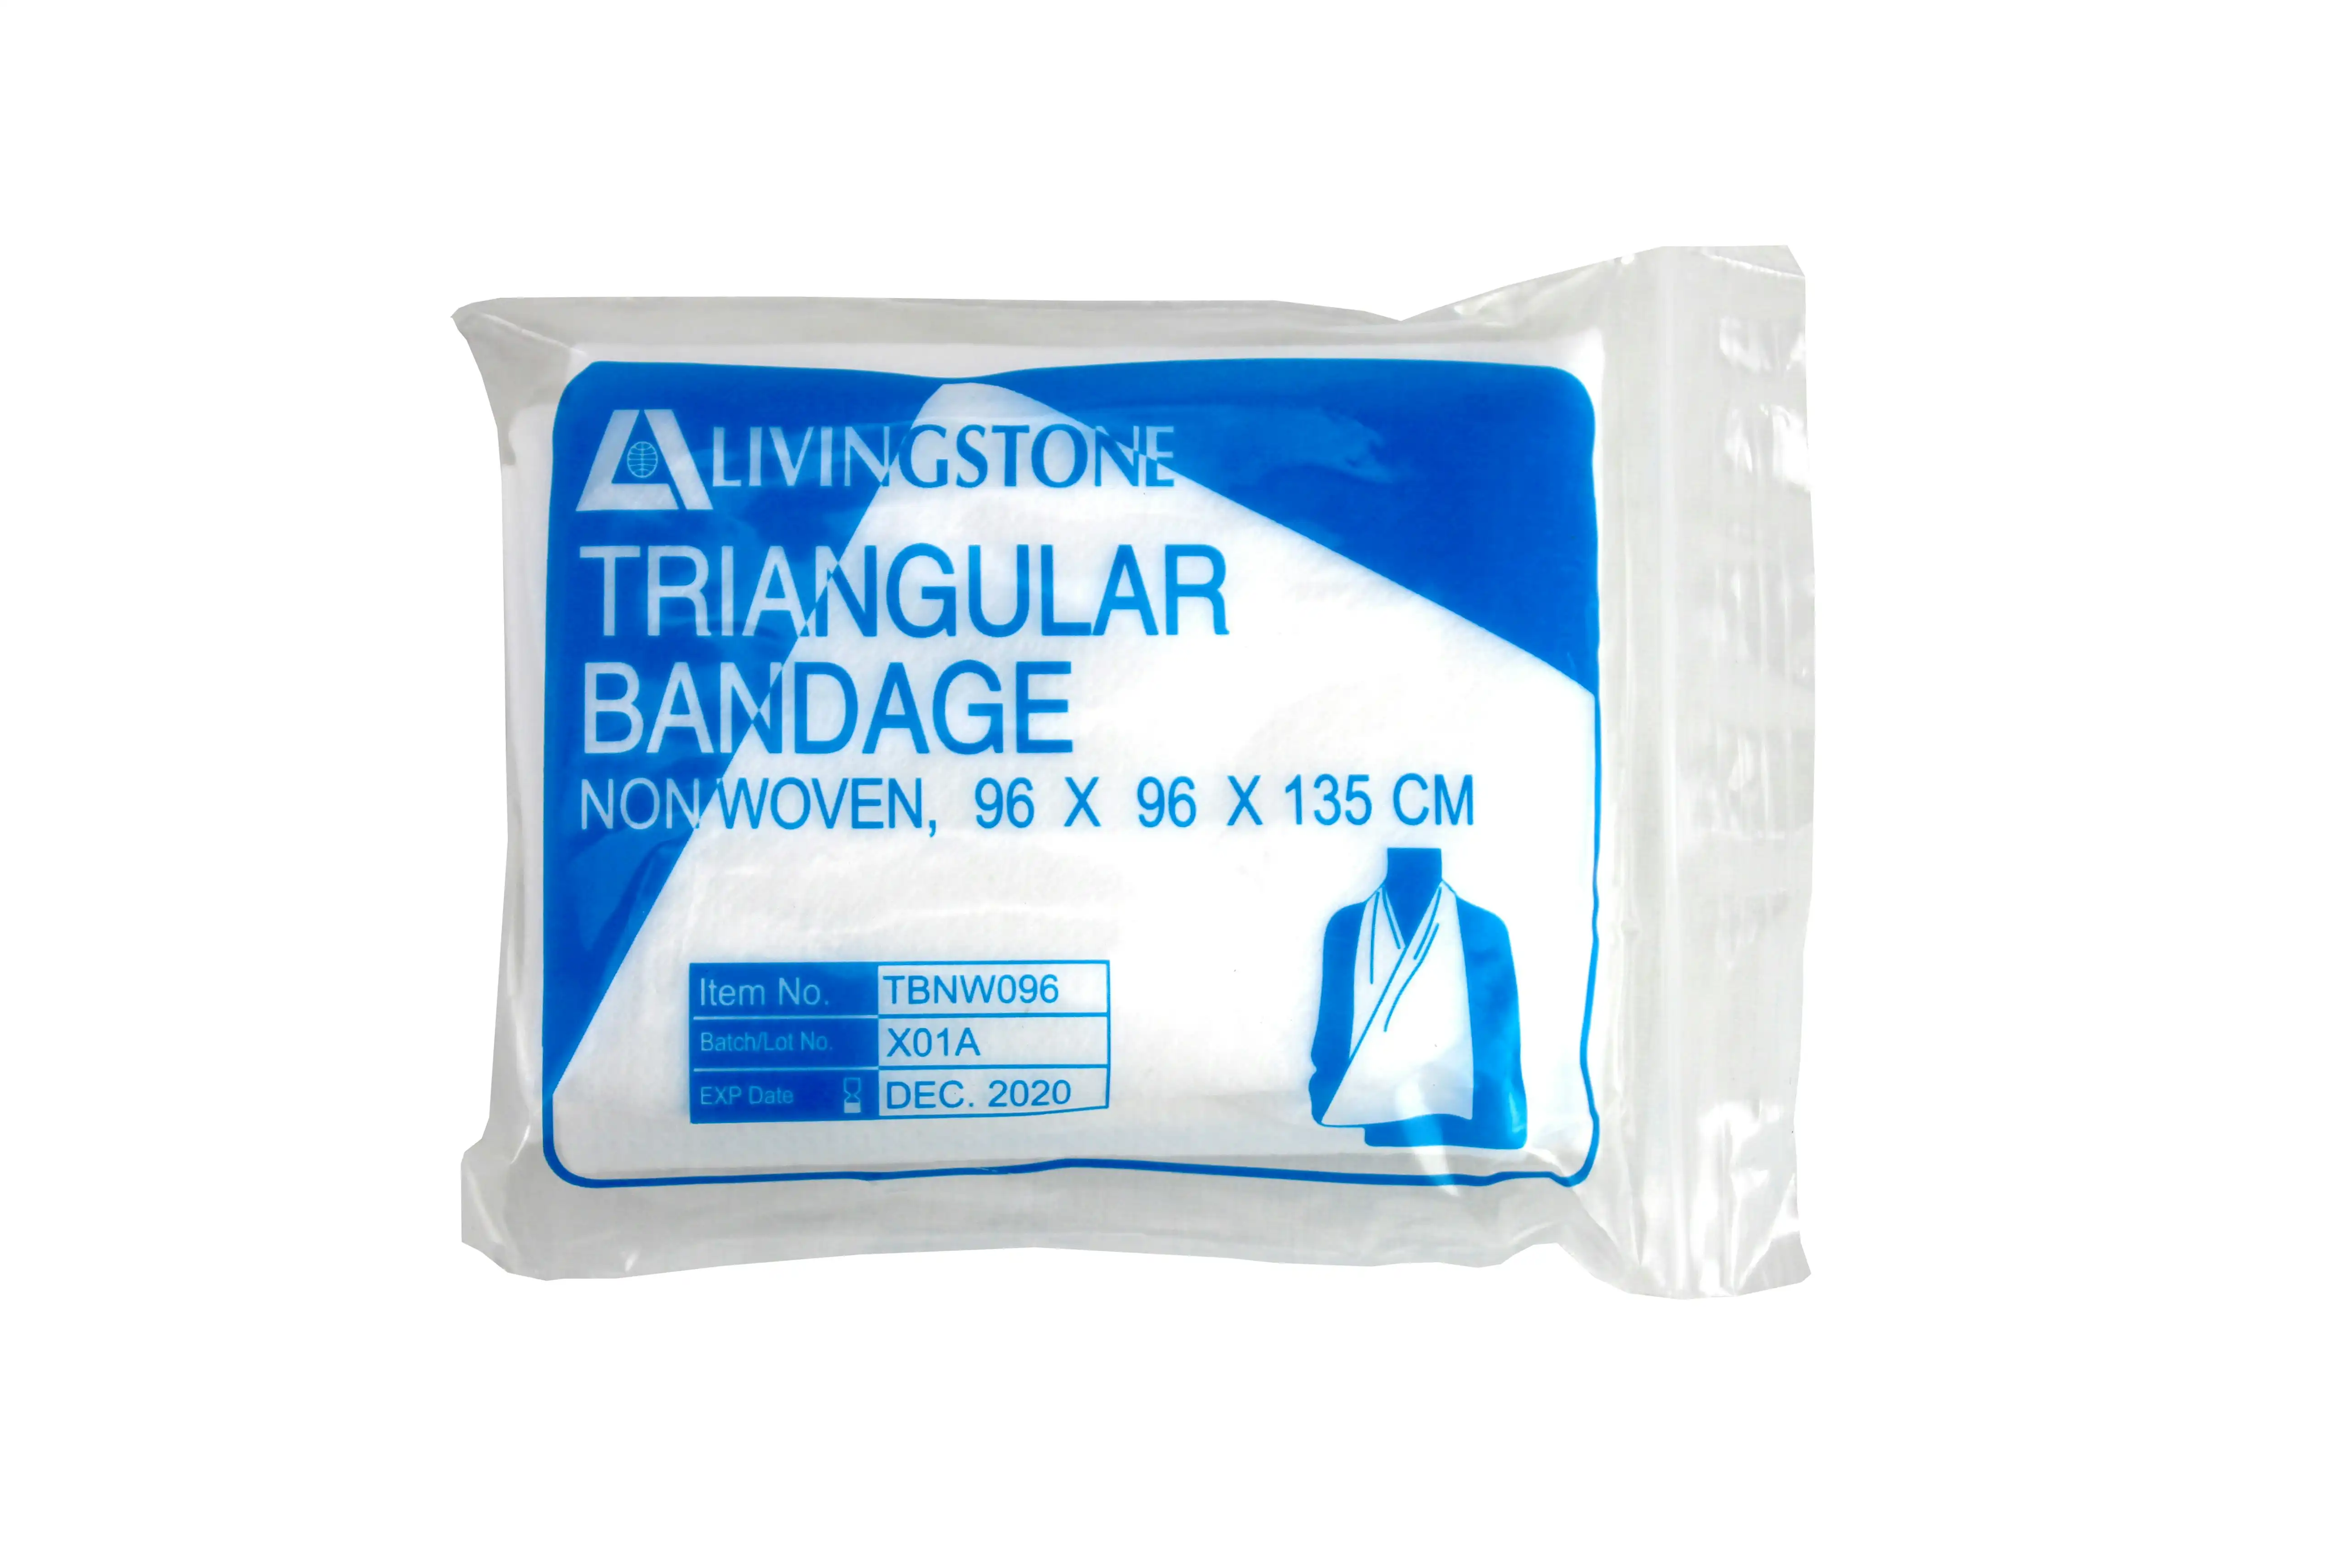 Livingstone Triangular Bandage, Non-Woven, White, 96 x 96 x 135 cm, Each